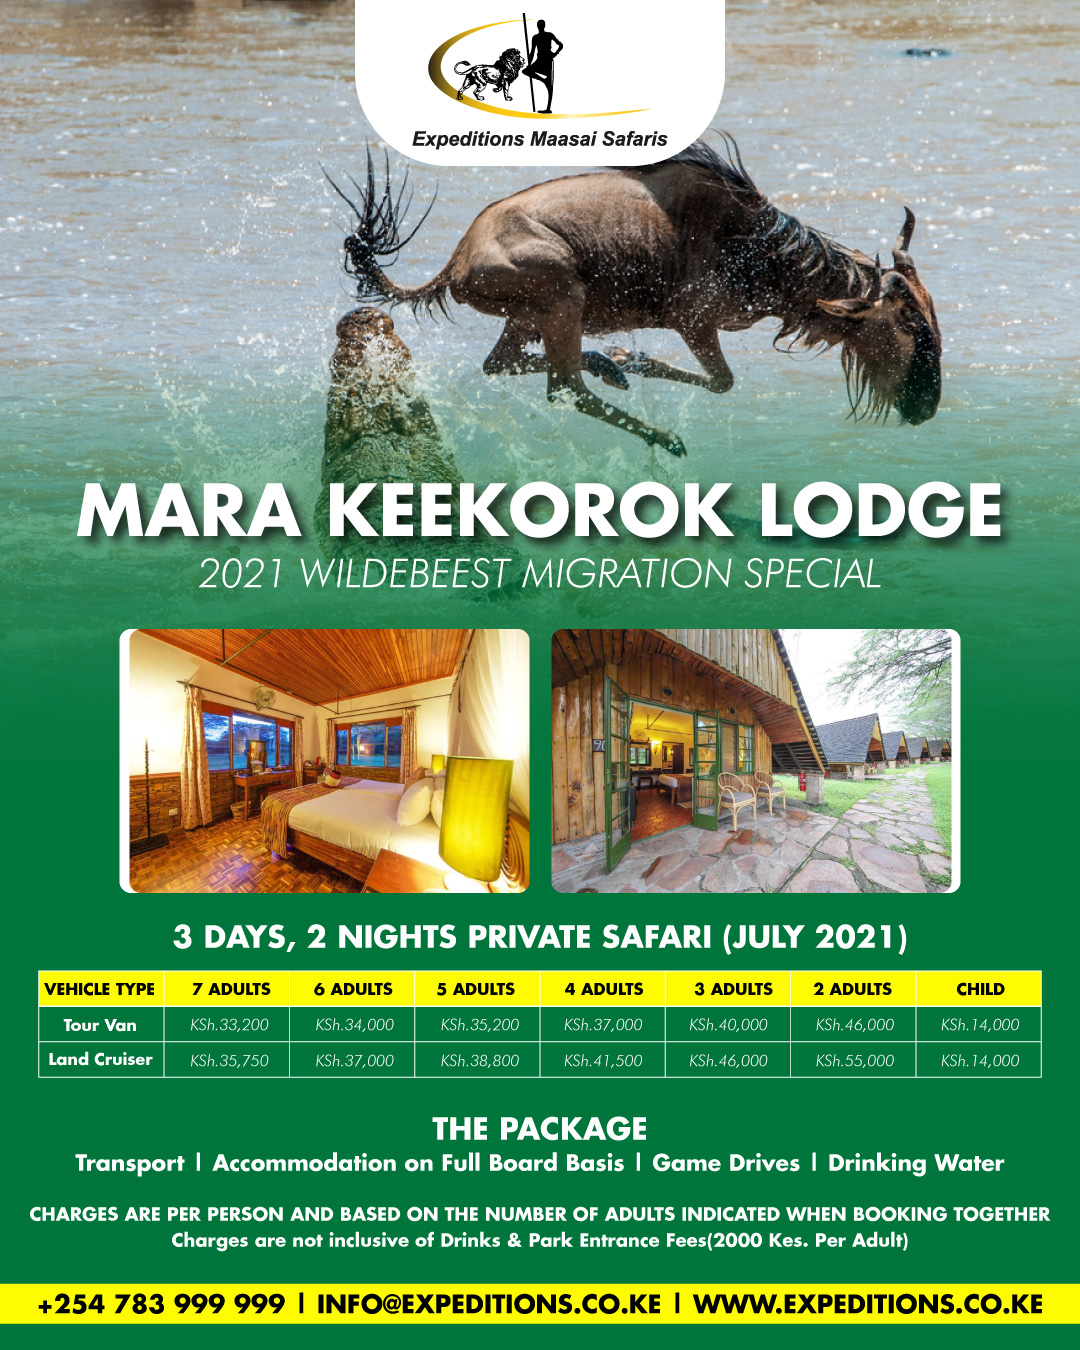 Enjoy the best rates for Mara Keekorok Lodge this wildebeest migration season